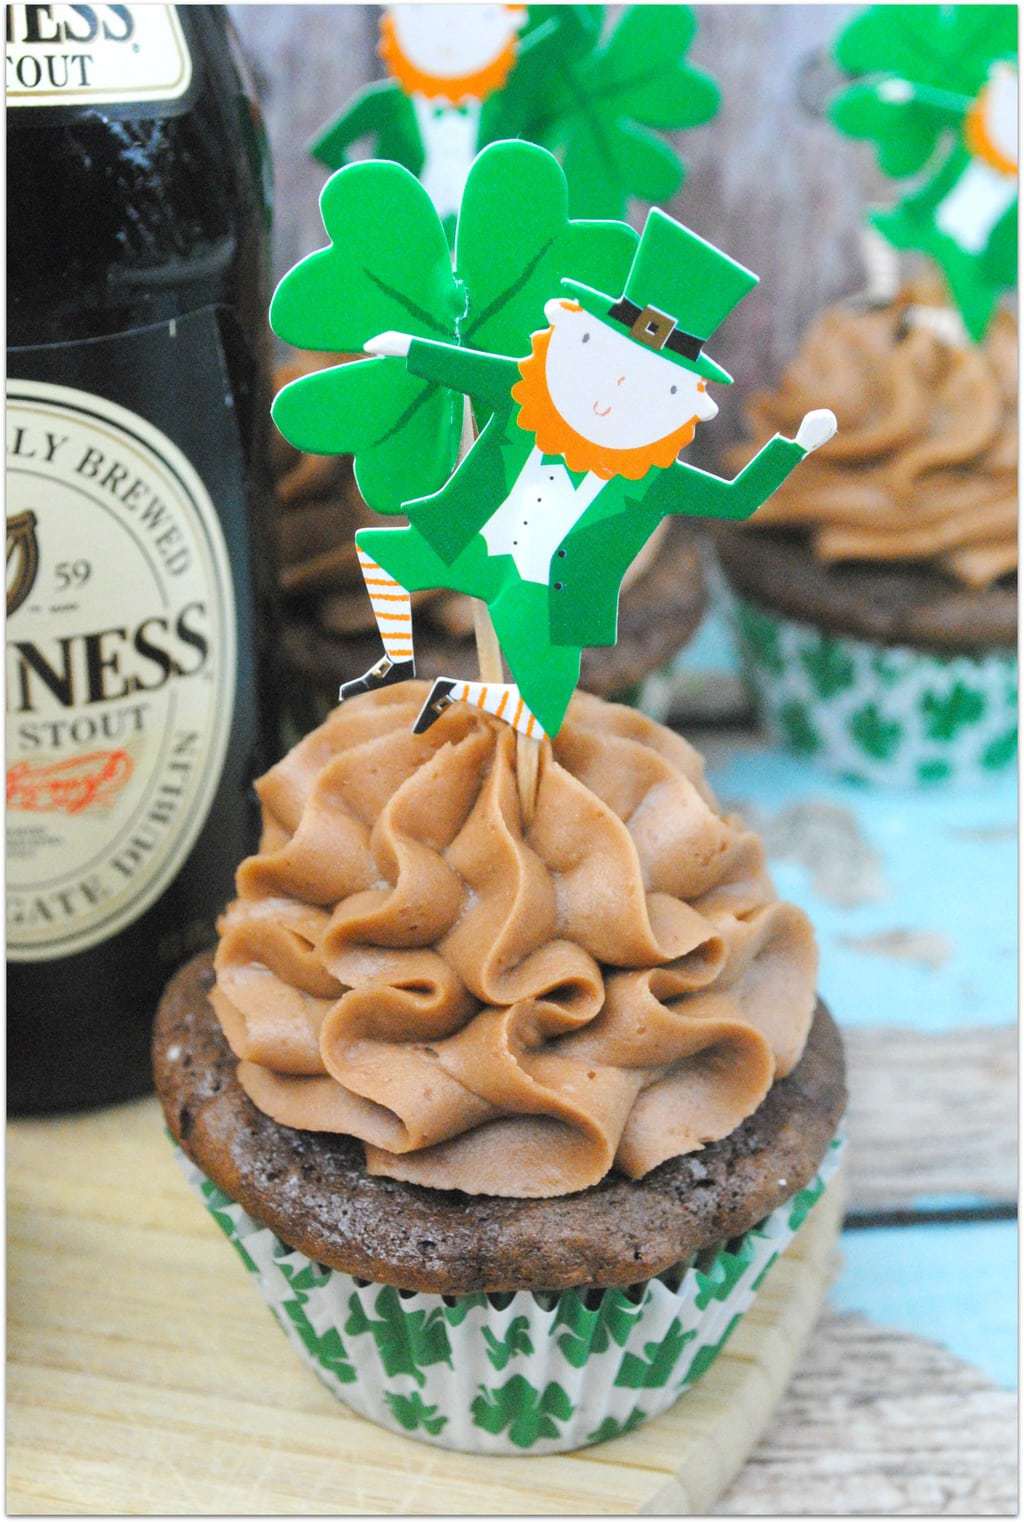 Chocolate cupcakes with chocolate icing wtih an Irish dancer on top.